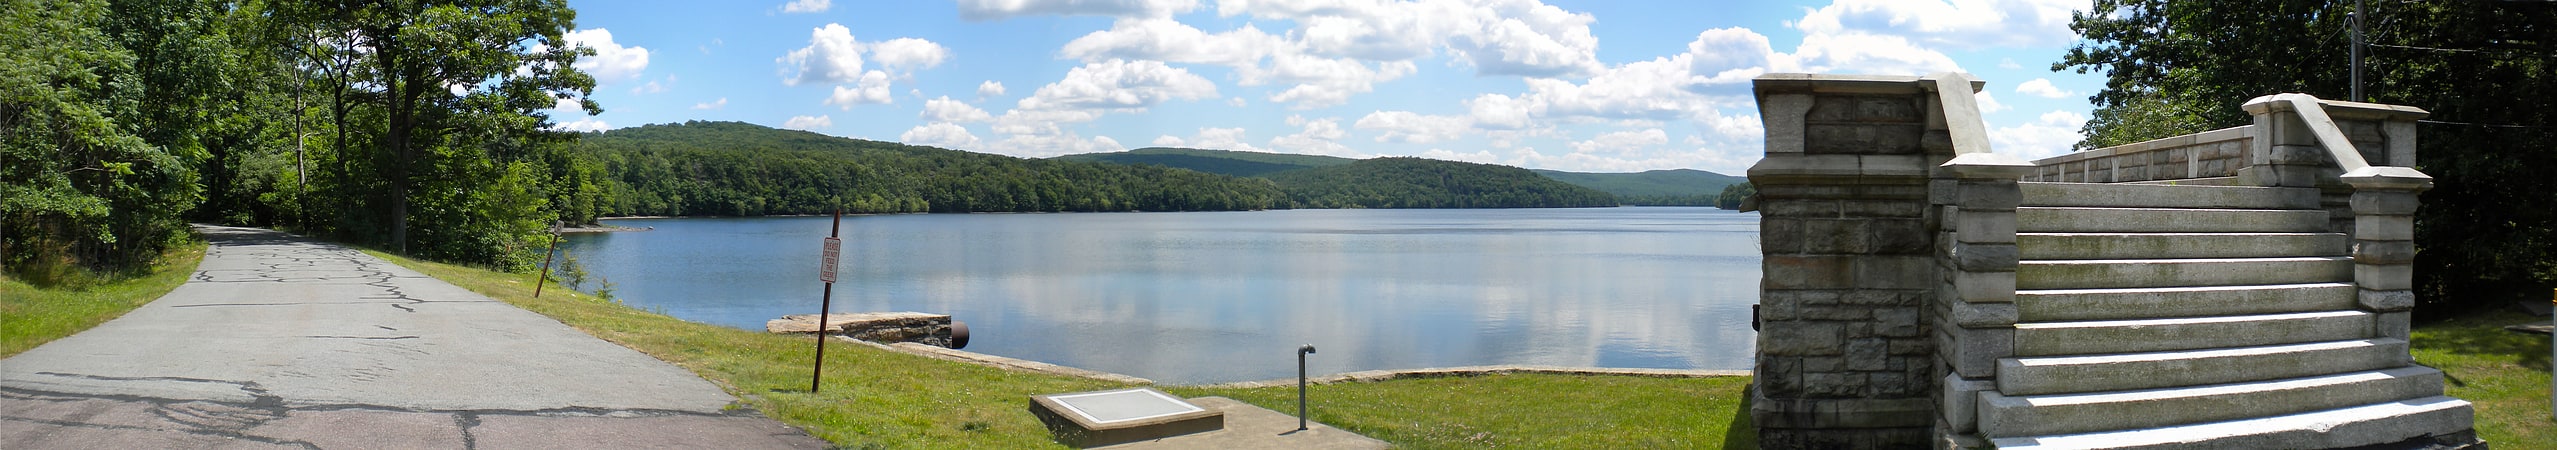 Reservoir in Pennsylvania